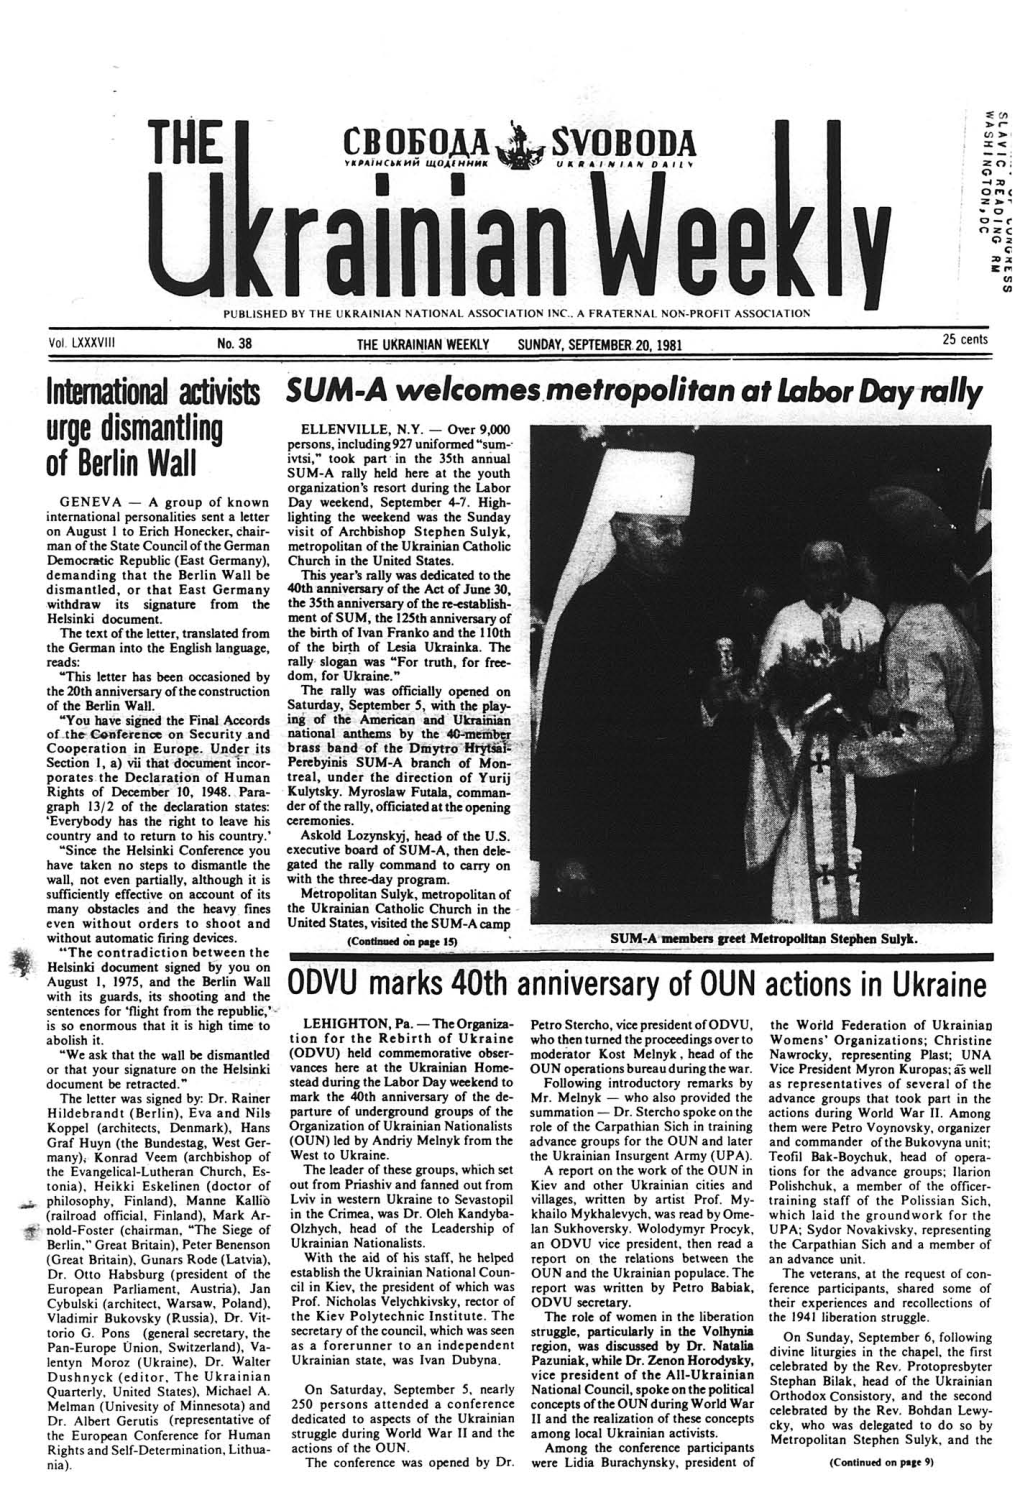 The Ukrainian Weekly 1981, No.38